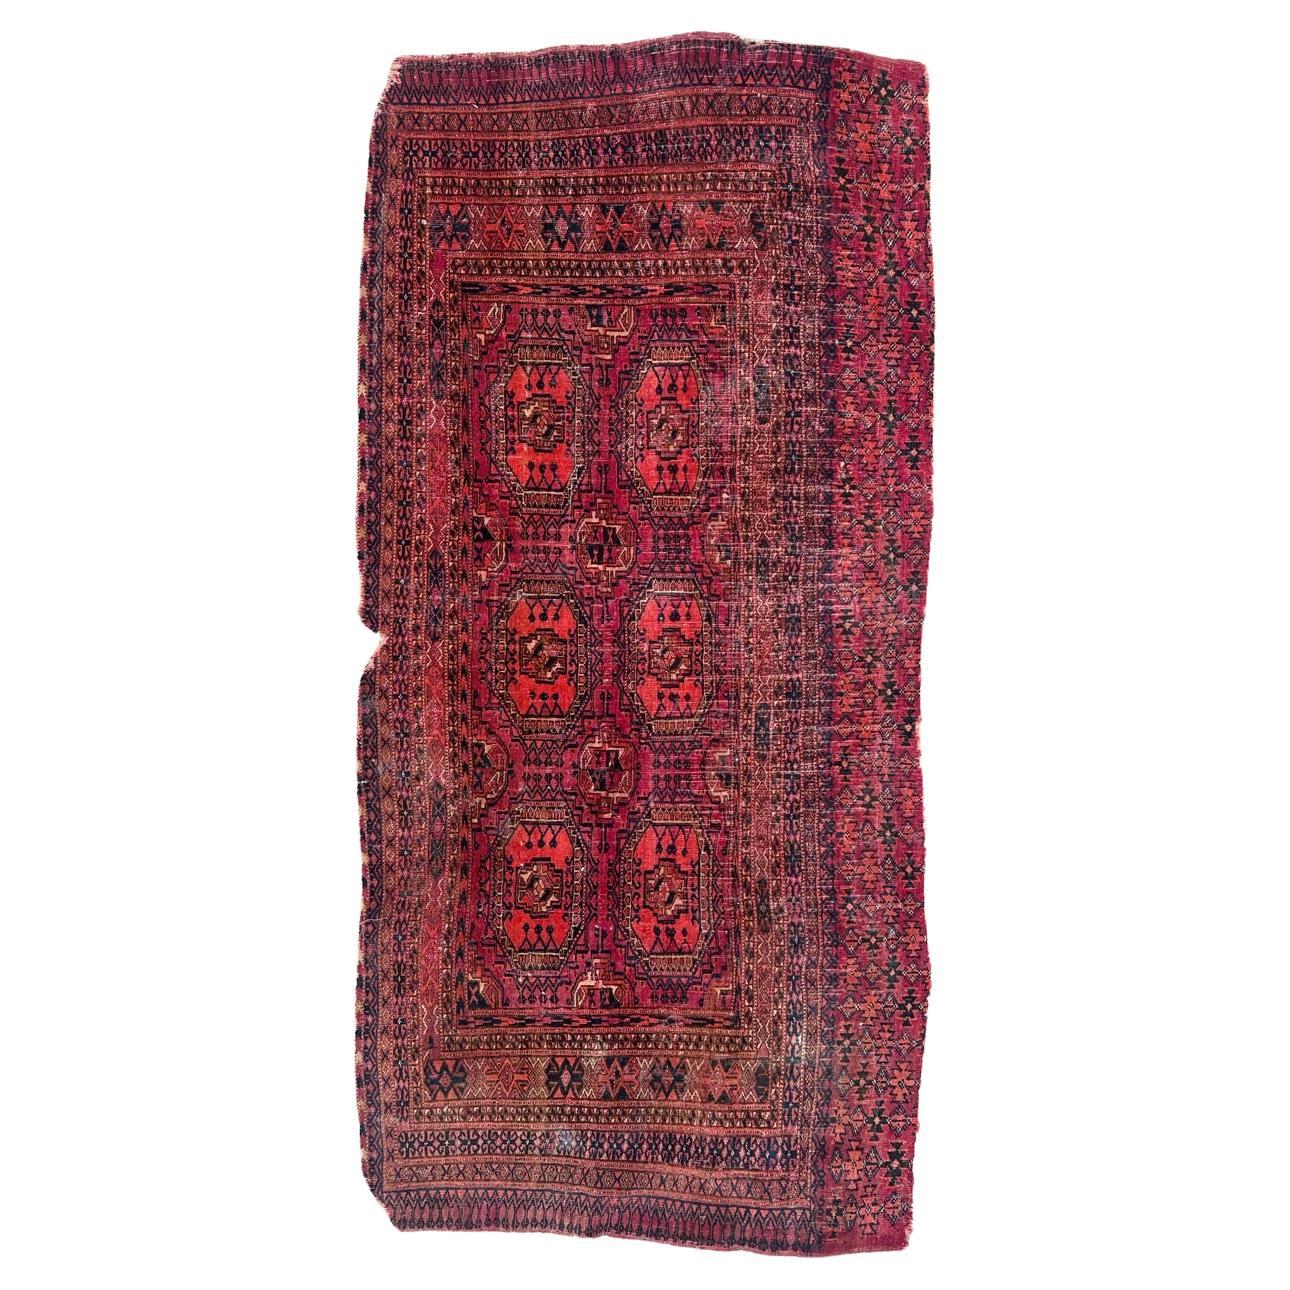 Bobyrug’s Antique Turkmen Yomut Chuval Horse Cover Rug